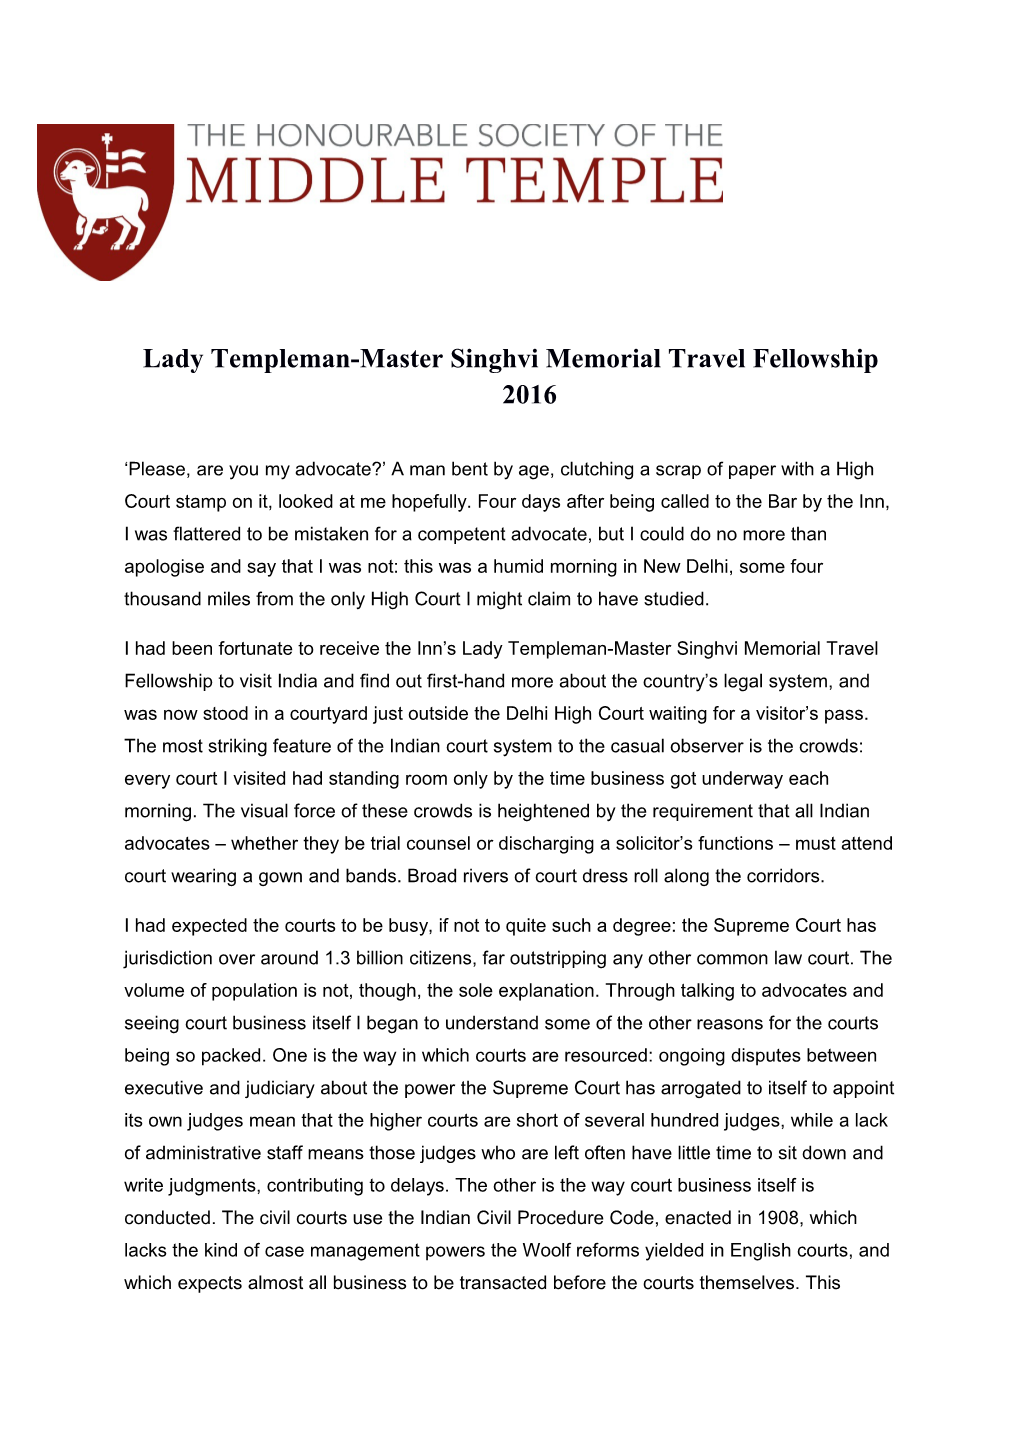 Lady Templeman-Master Singhvi Memorial Travel Fellowship 2016